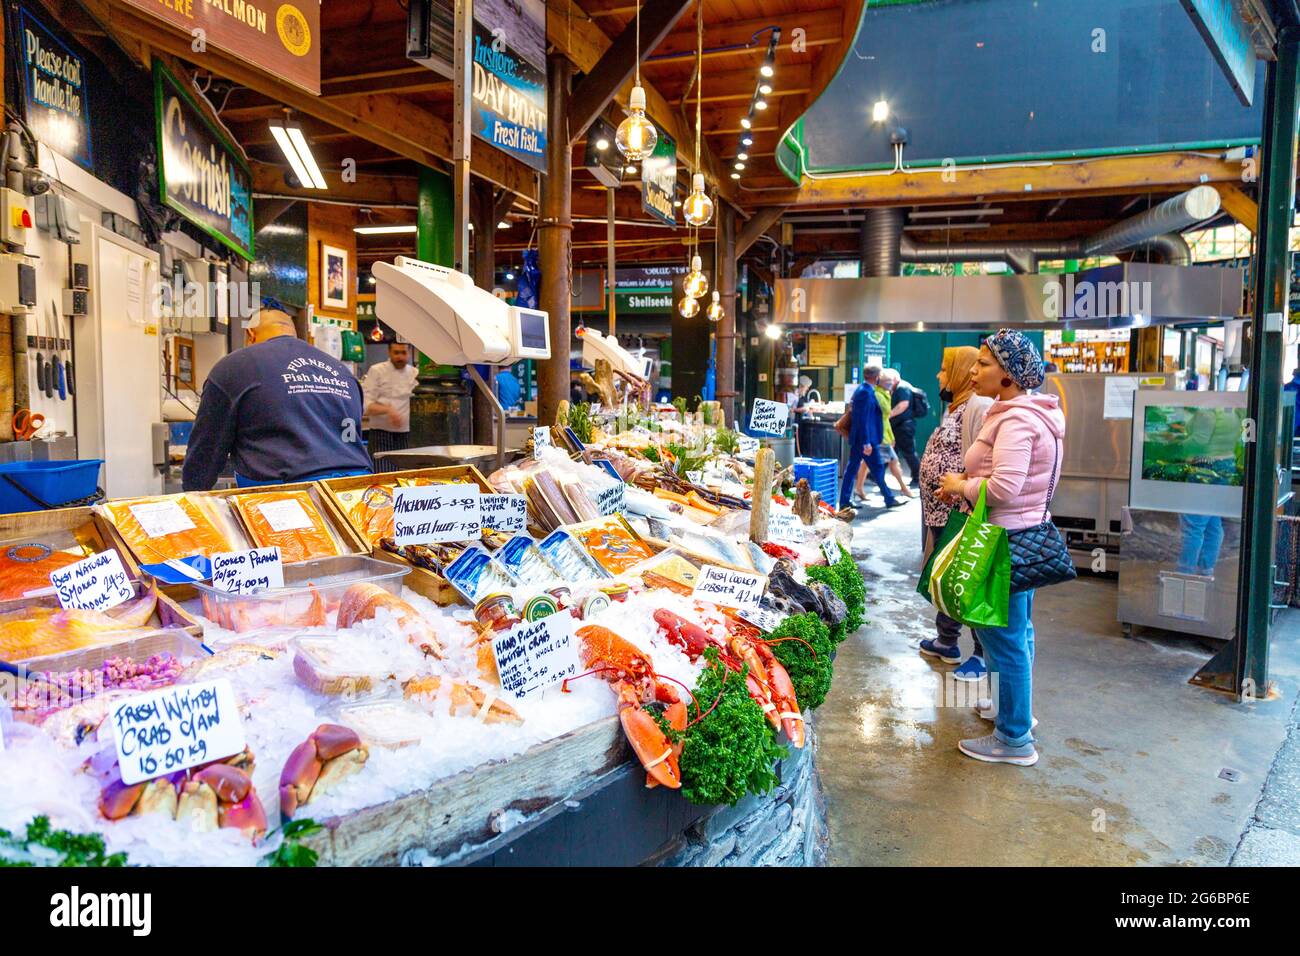 Furness Fish Markets stall at Borough Market, London Bridge, London, UK Stock Photo